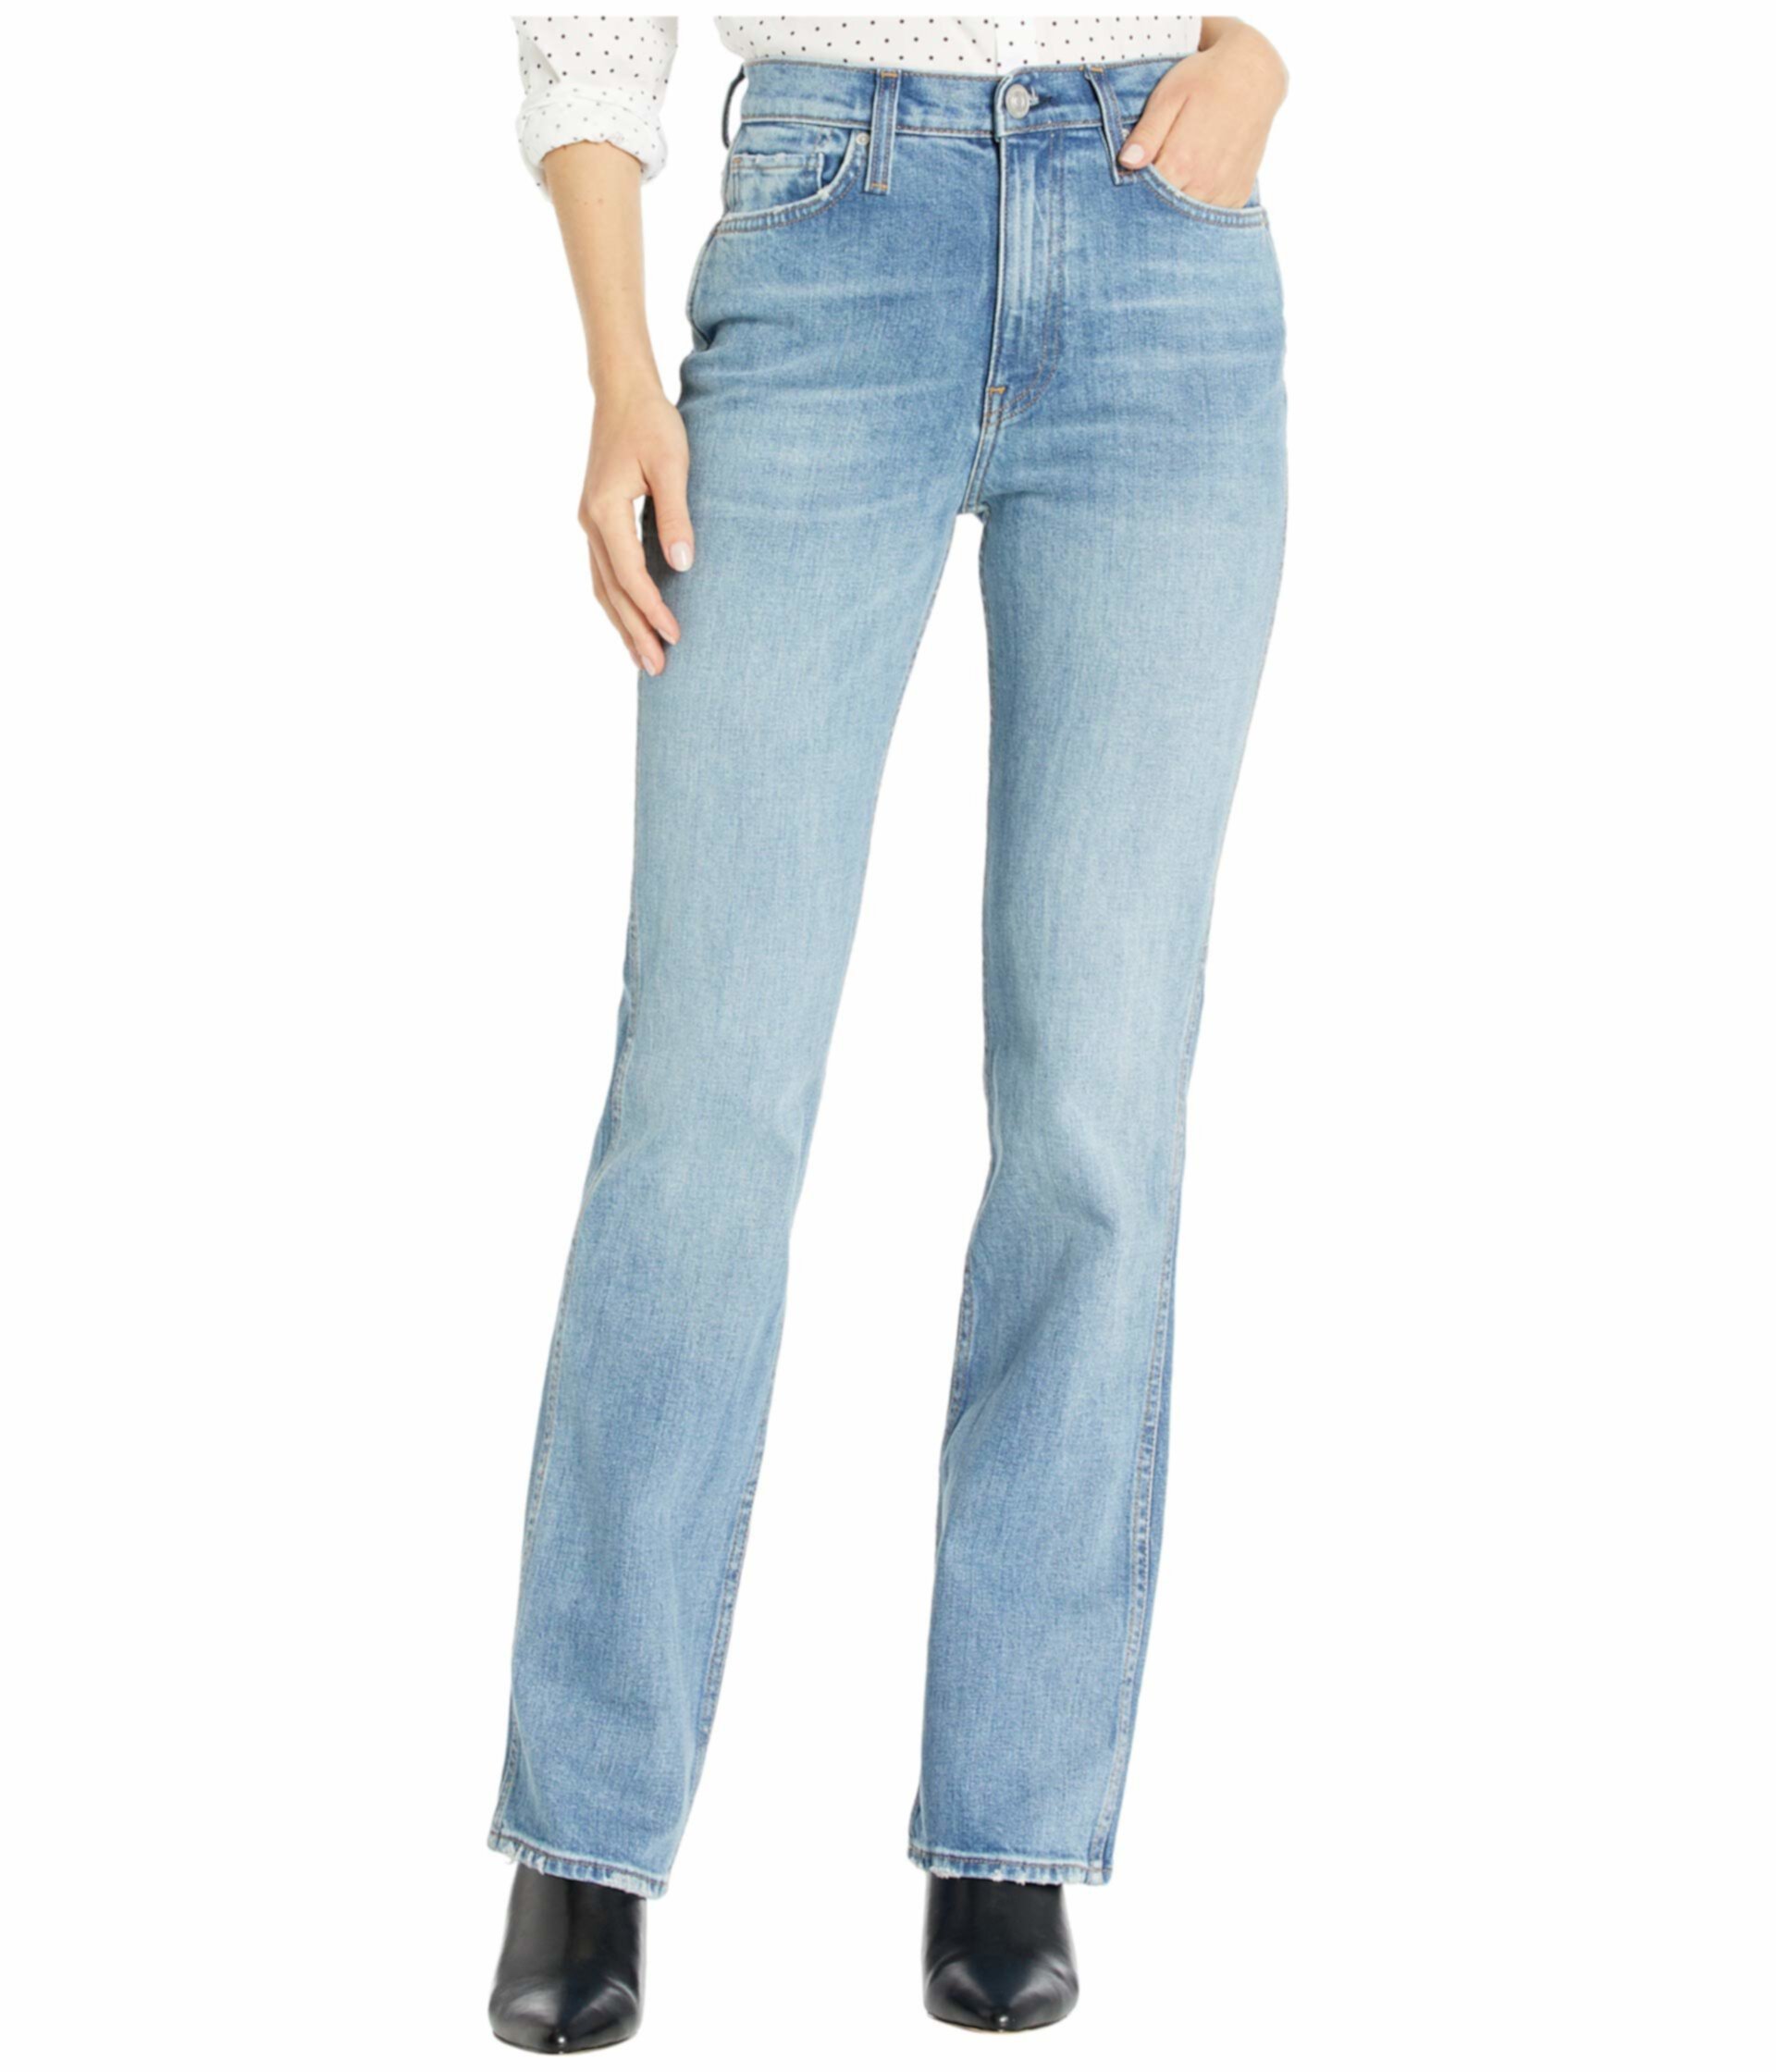 Джинсы Bootcut с высокой посадкой от Abbey Hudson Jeans